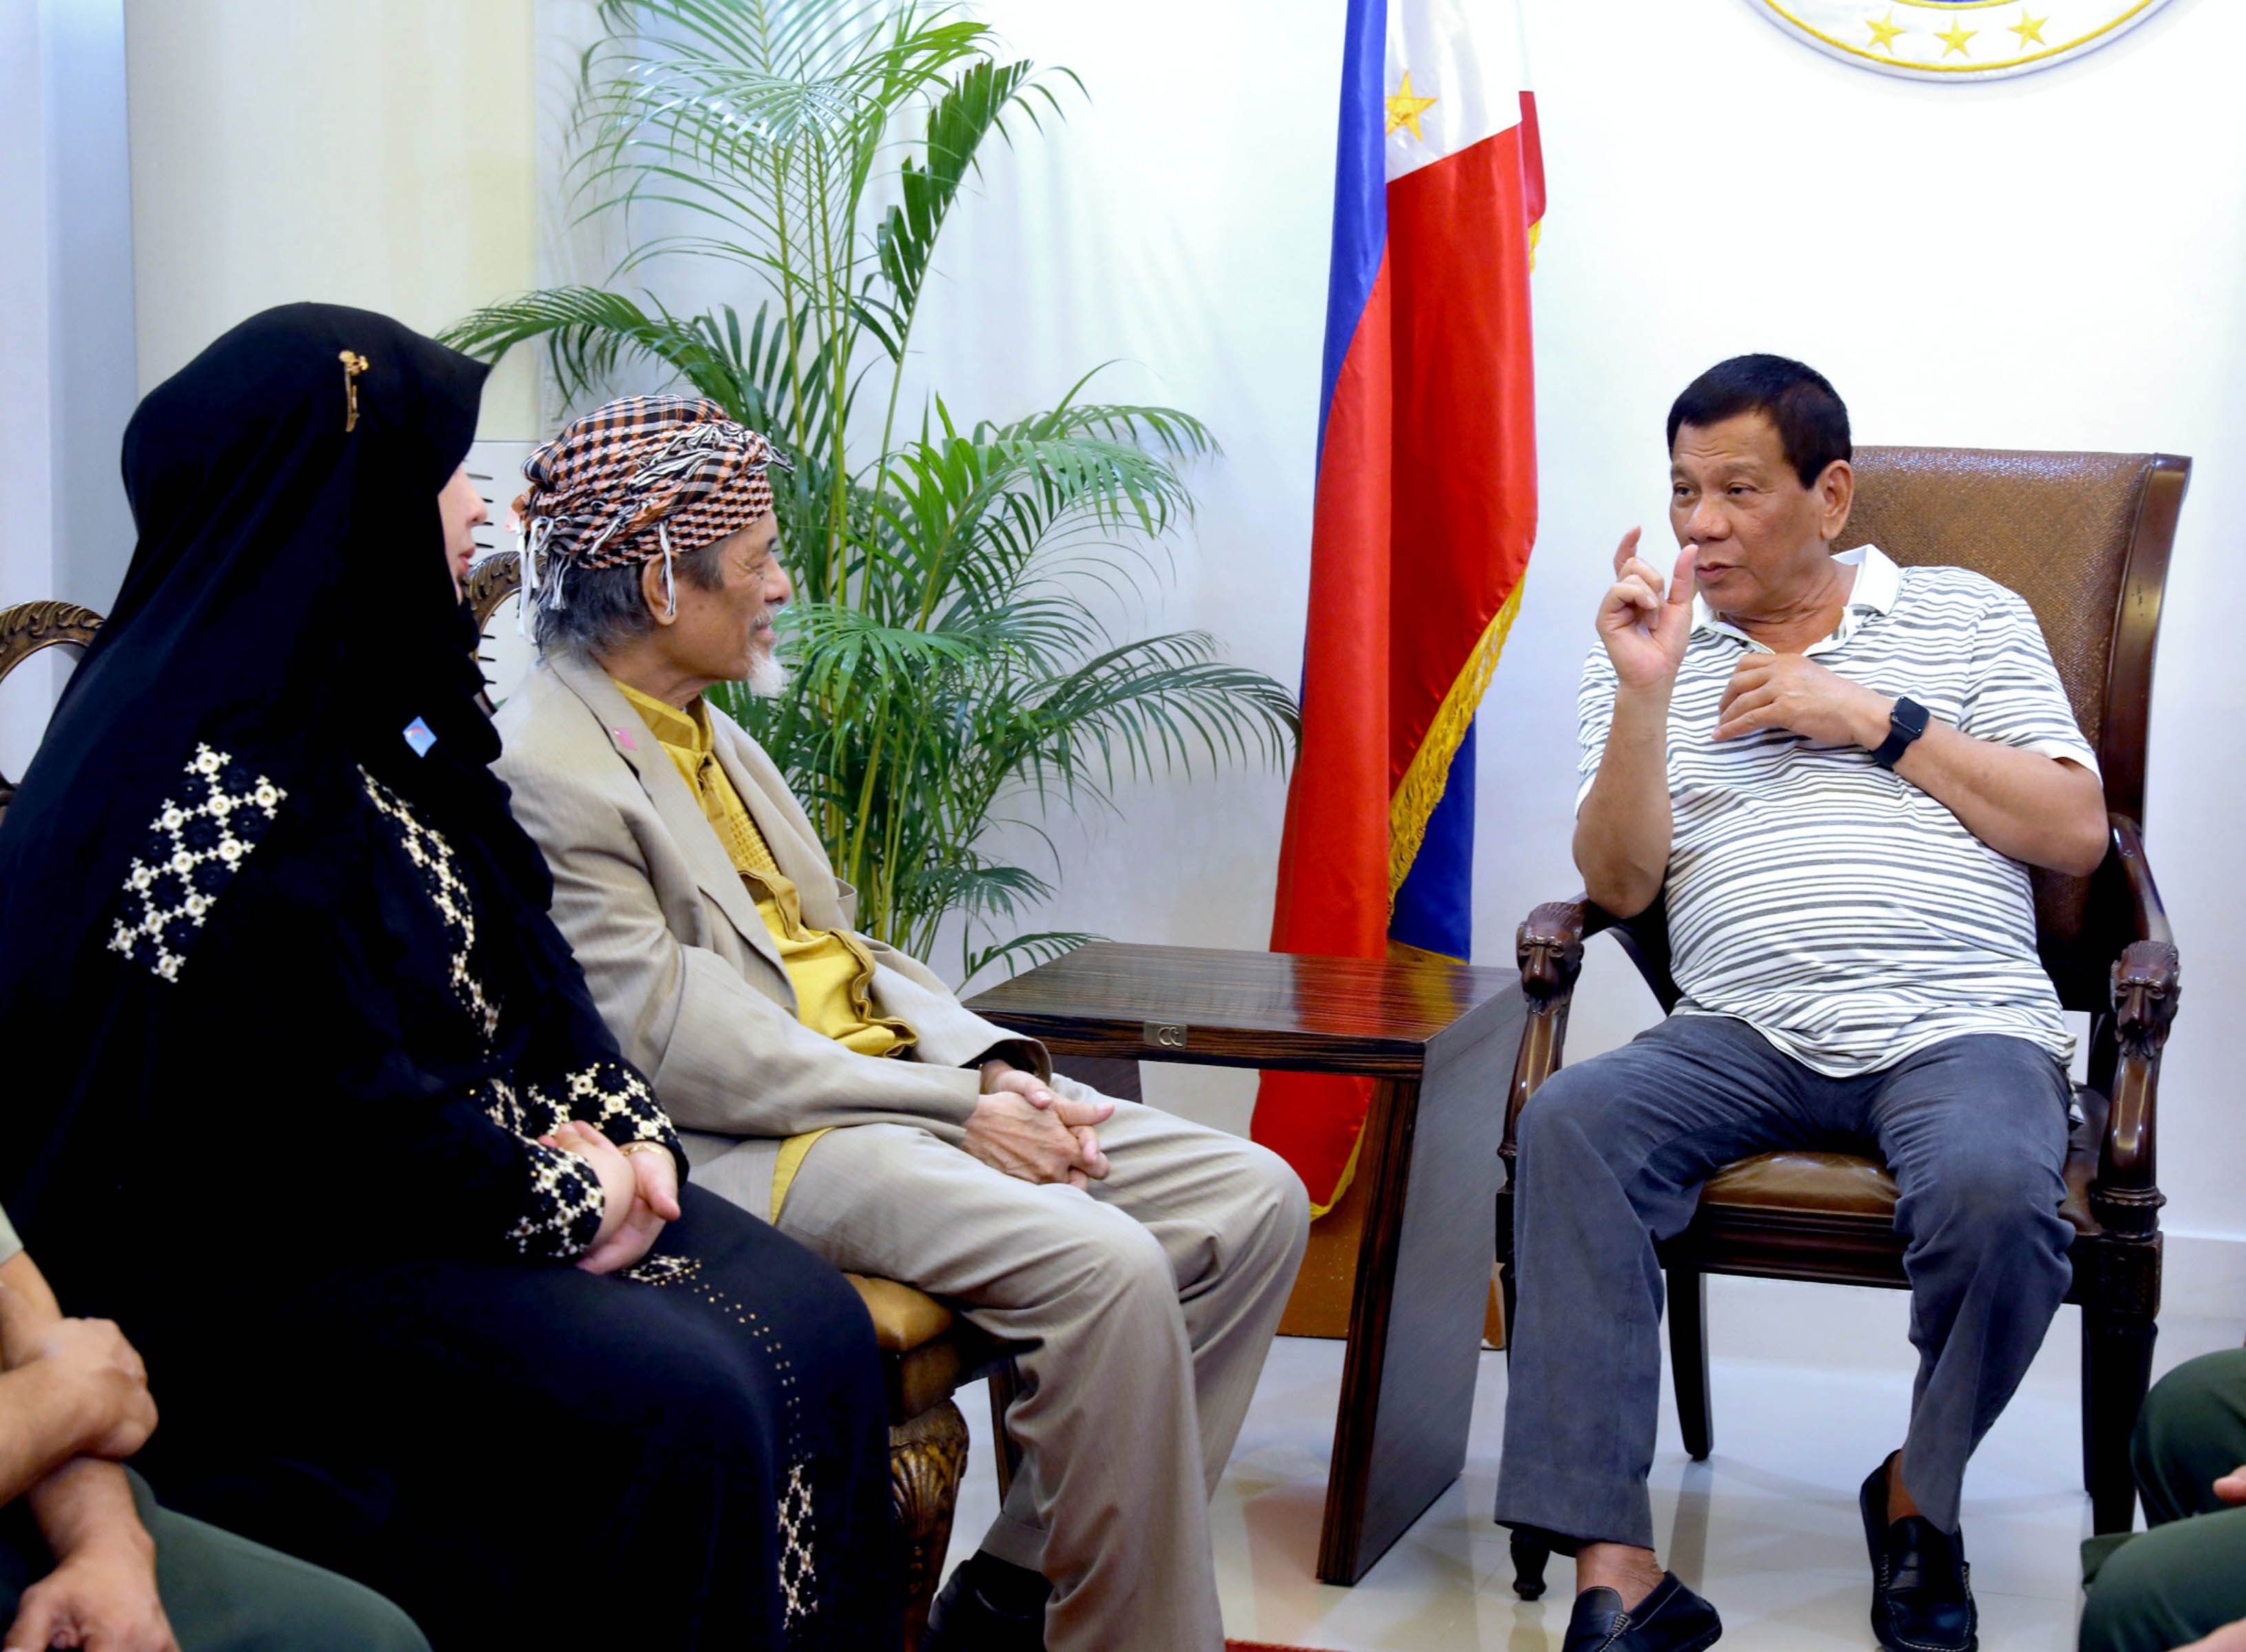 President Duterte discusses matters with Moro National Liberation Front Chairman Nur Misuari